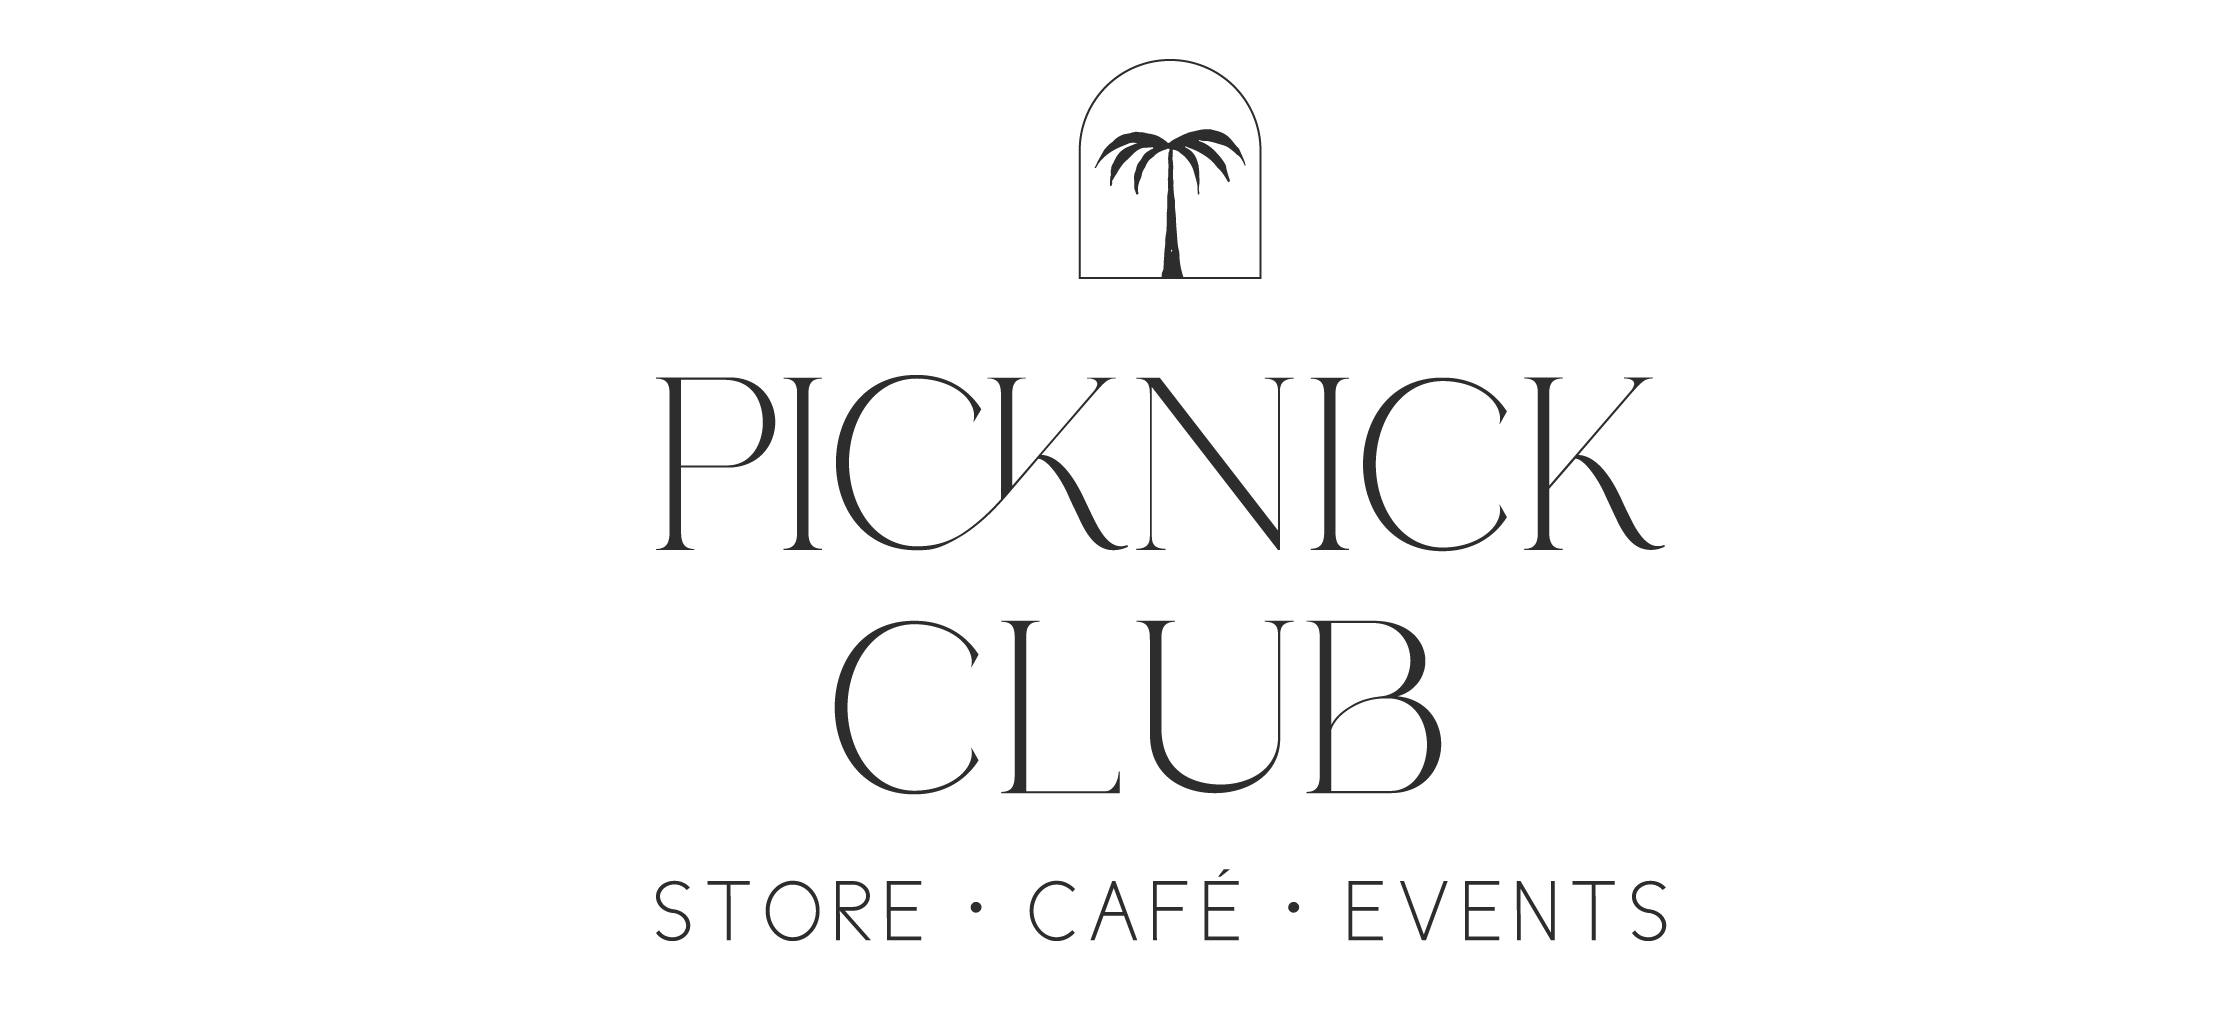 Picknick Club | Café - Store - Events